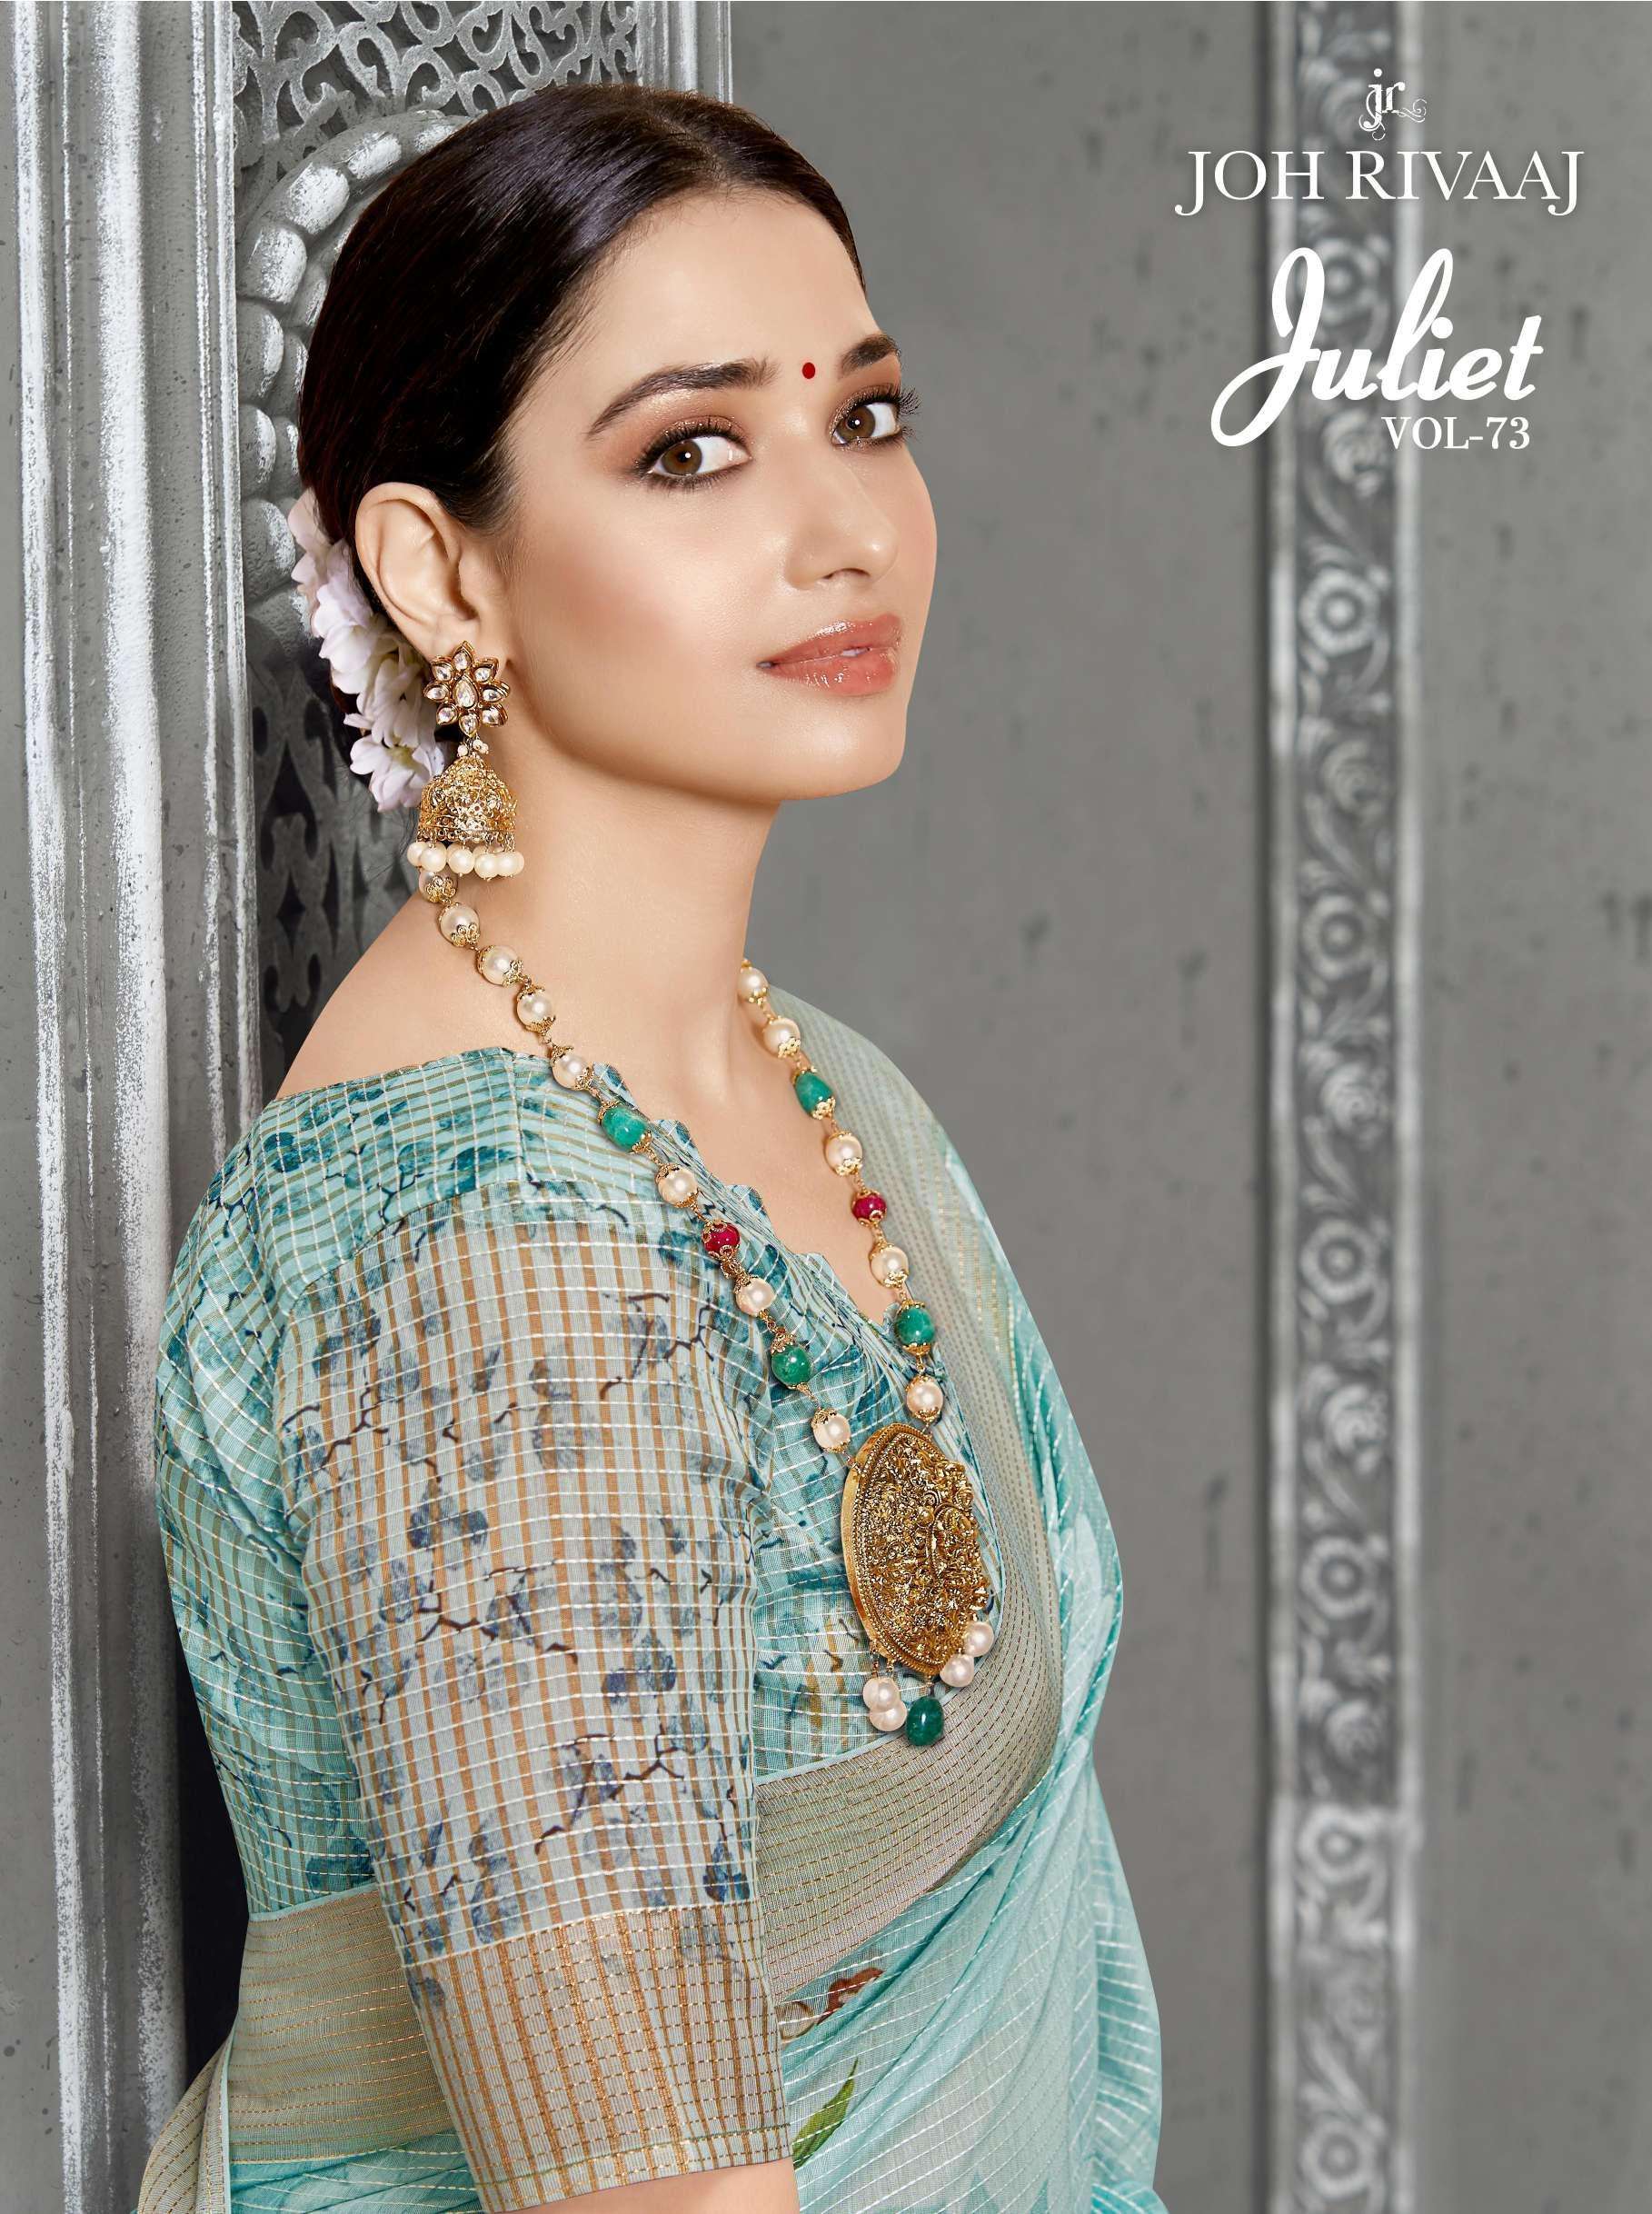 joh rivaaj presents juilet vol 73 tamannah bhatia designer digital printed sarees catalog wholesaler and exporters 2021 11 22 18 41 23